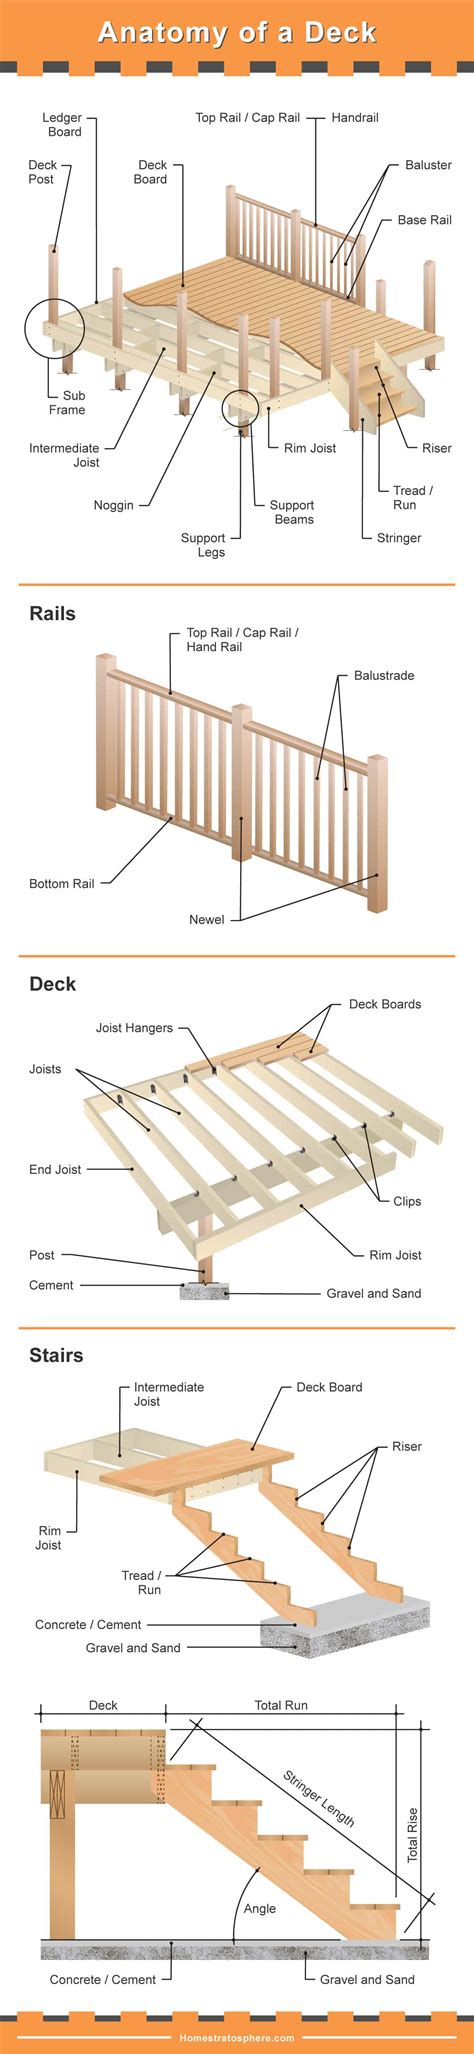 parts   deck illustrated diagrams describe   components needed  backyard construction